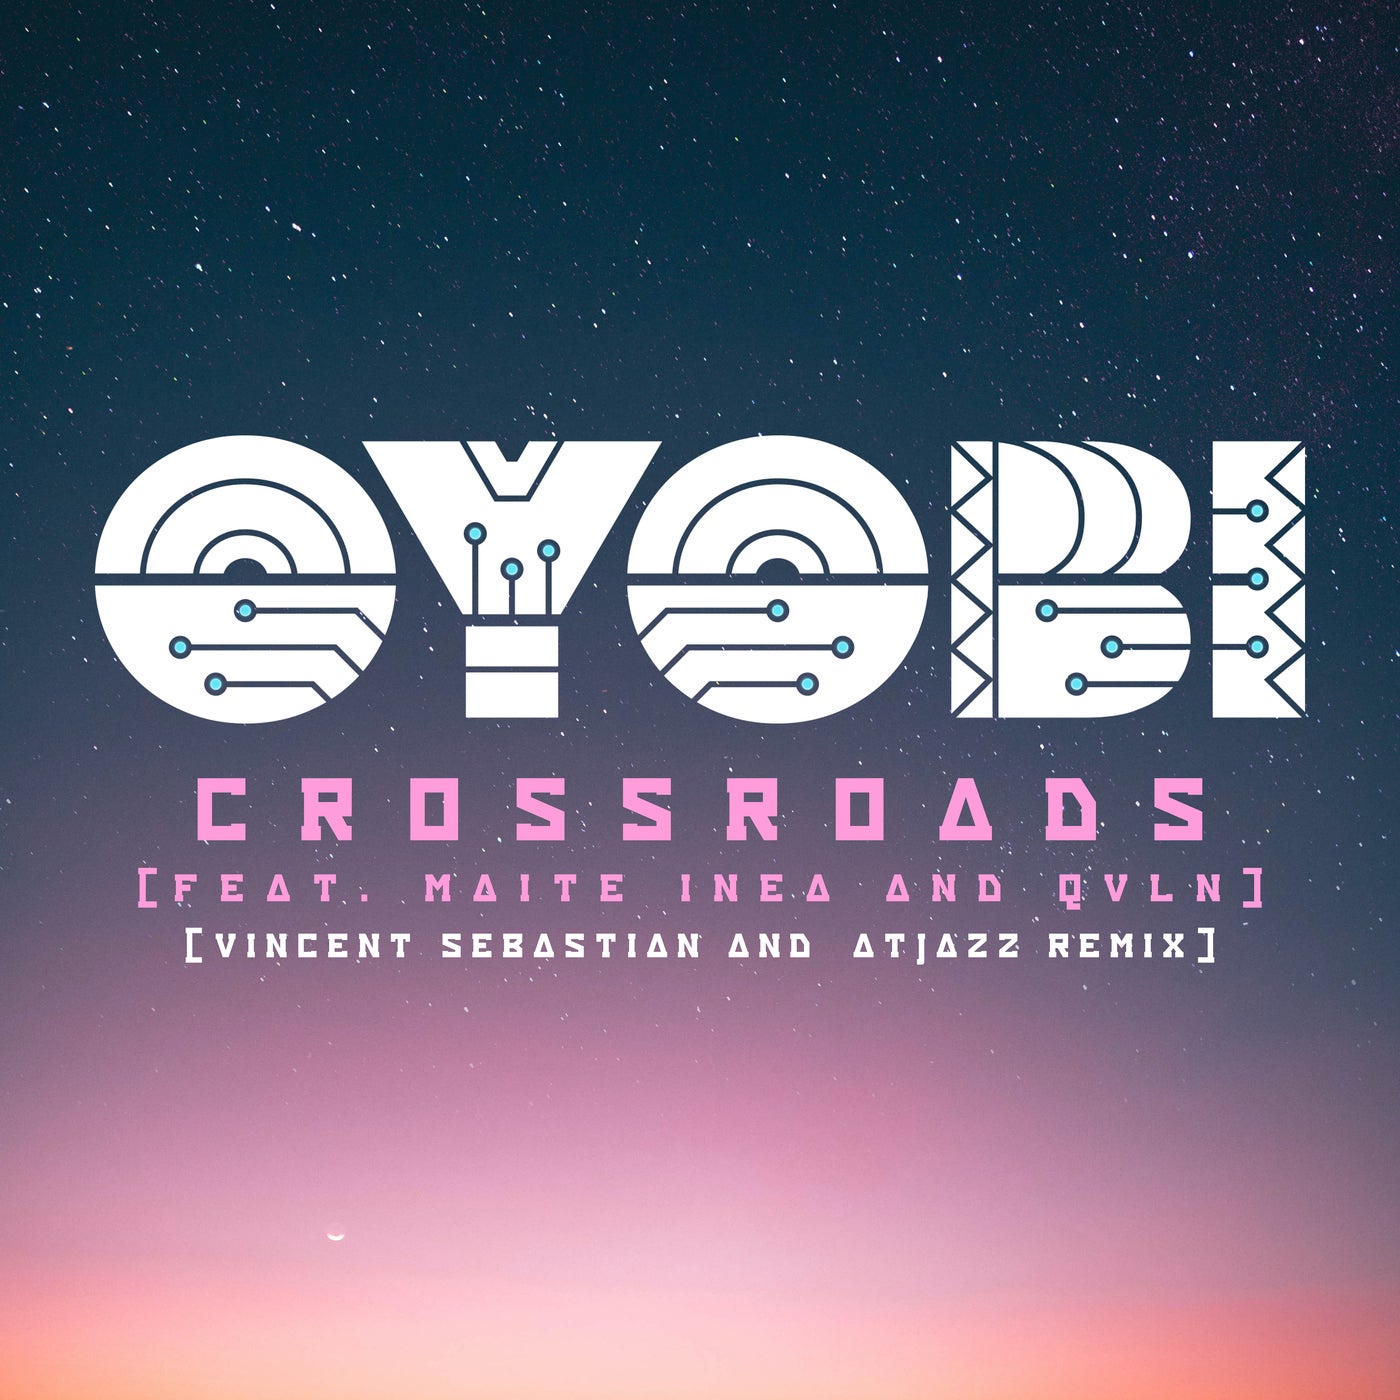 Oyobi - Crossroads (Vincent Sebastian & Atjazz Remix) [feat. Maitê Inaê & QVLN] [Atjazz Record Company]